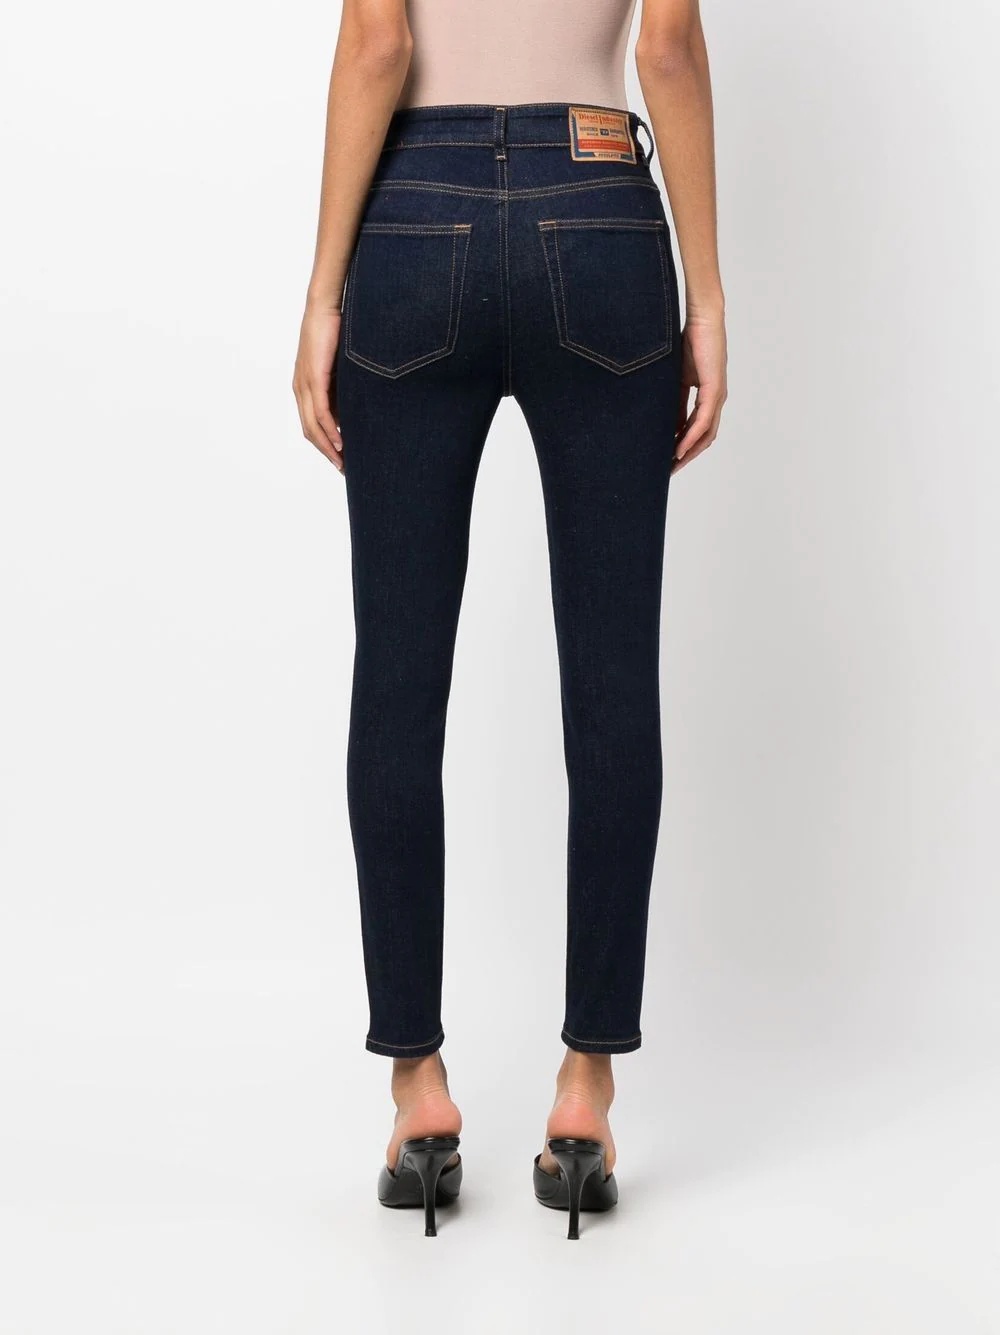 Slandy skinny jeans - 4